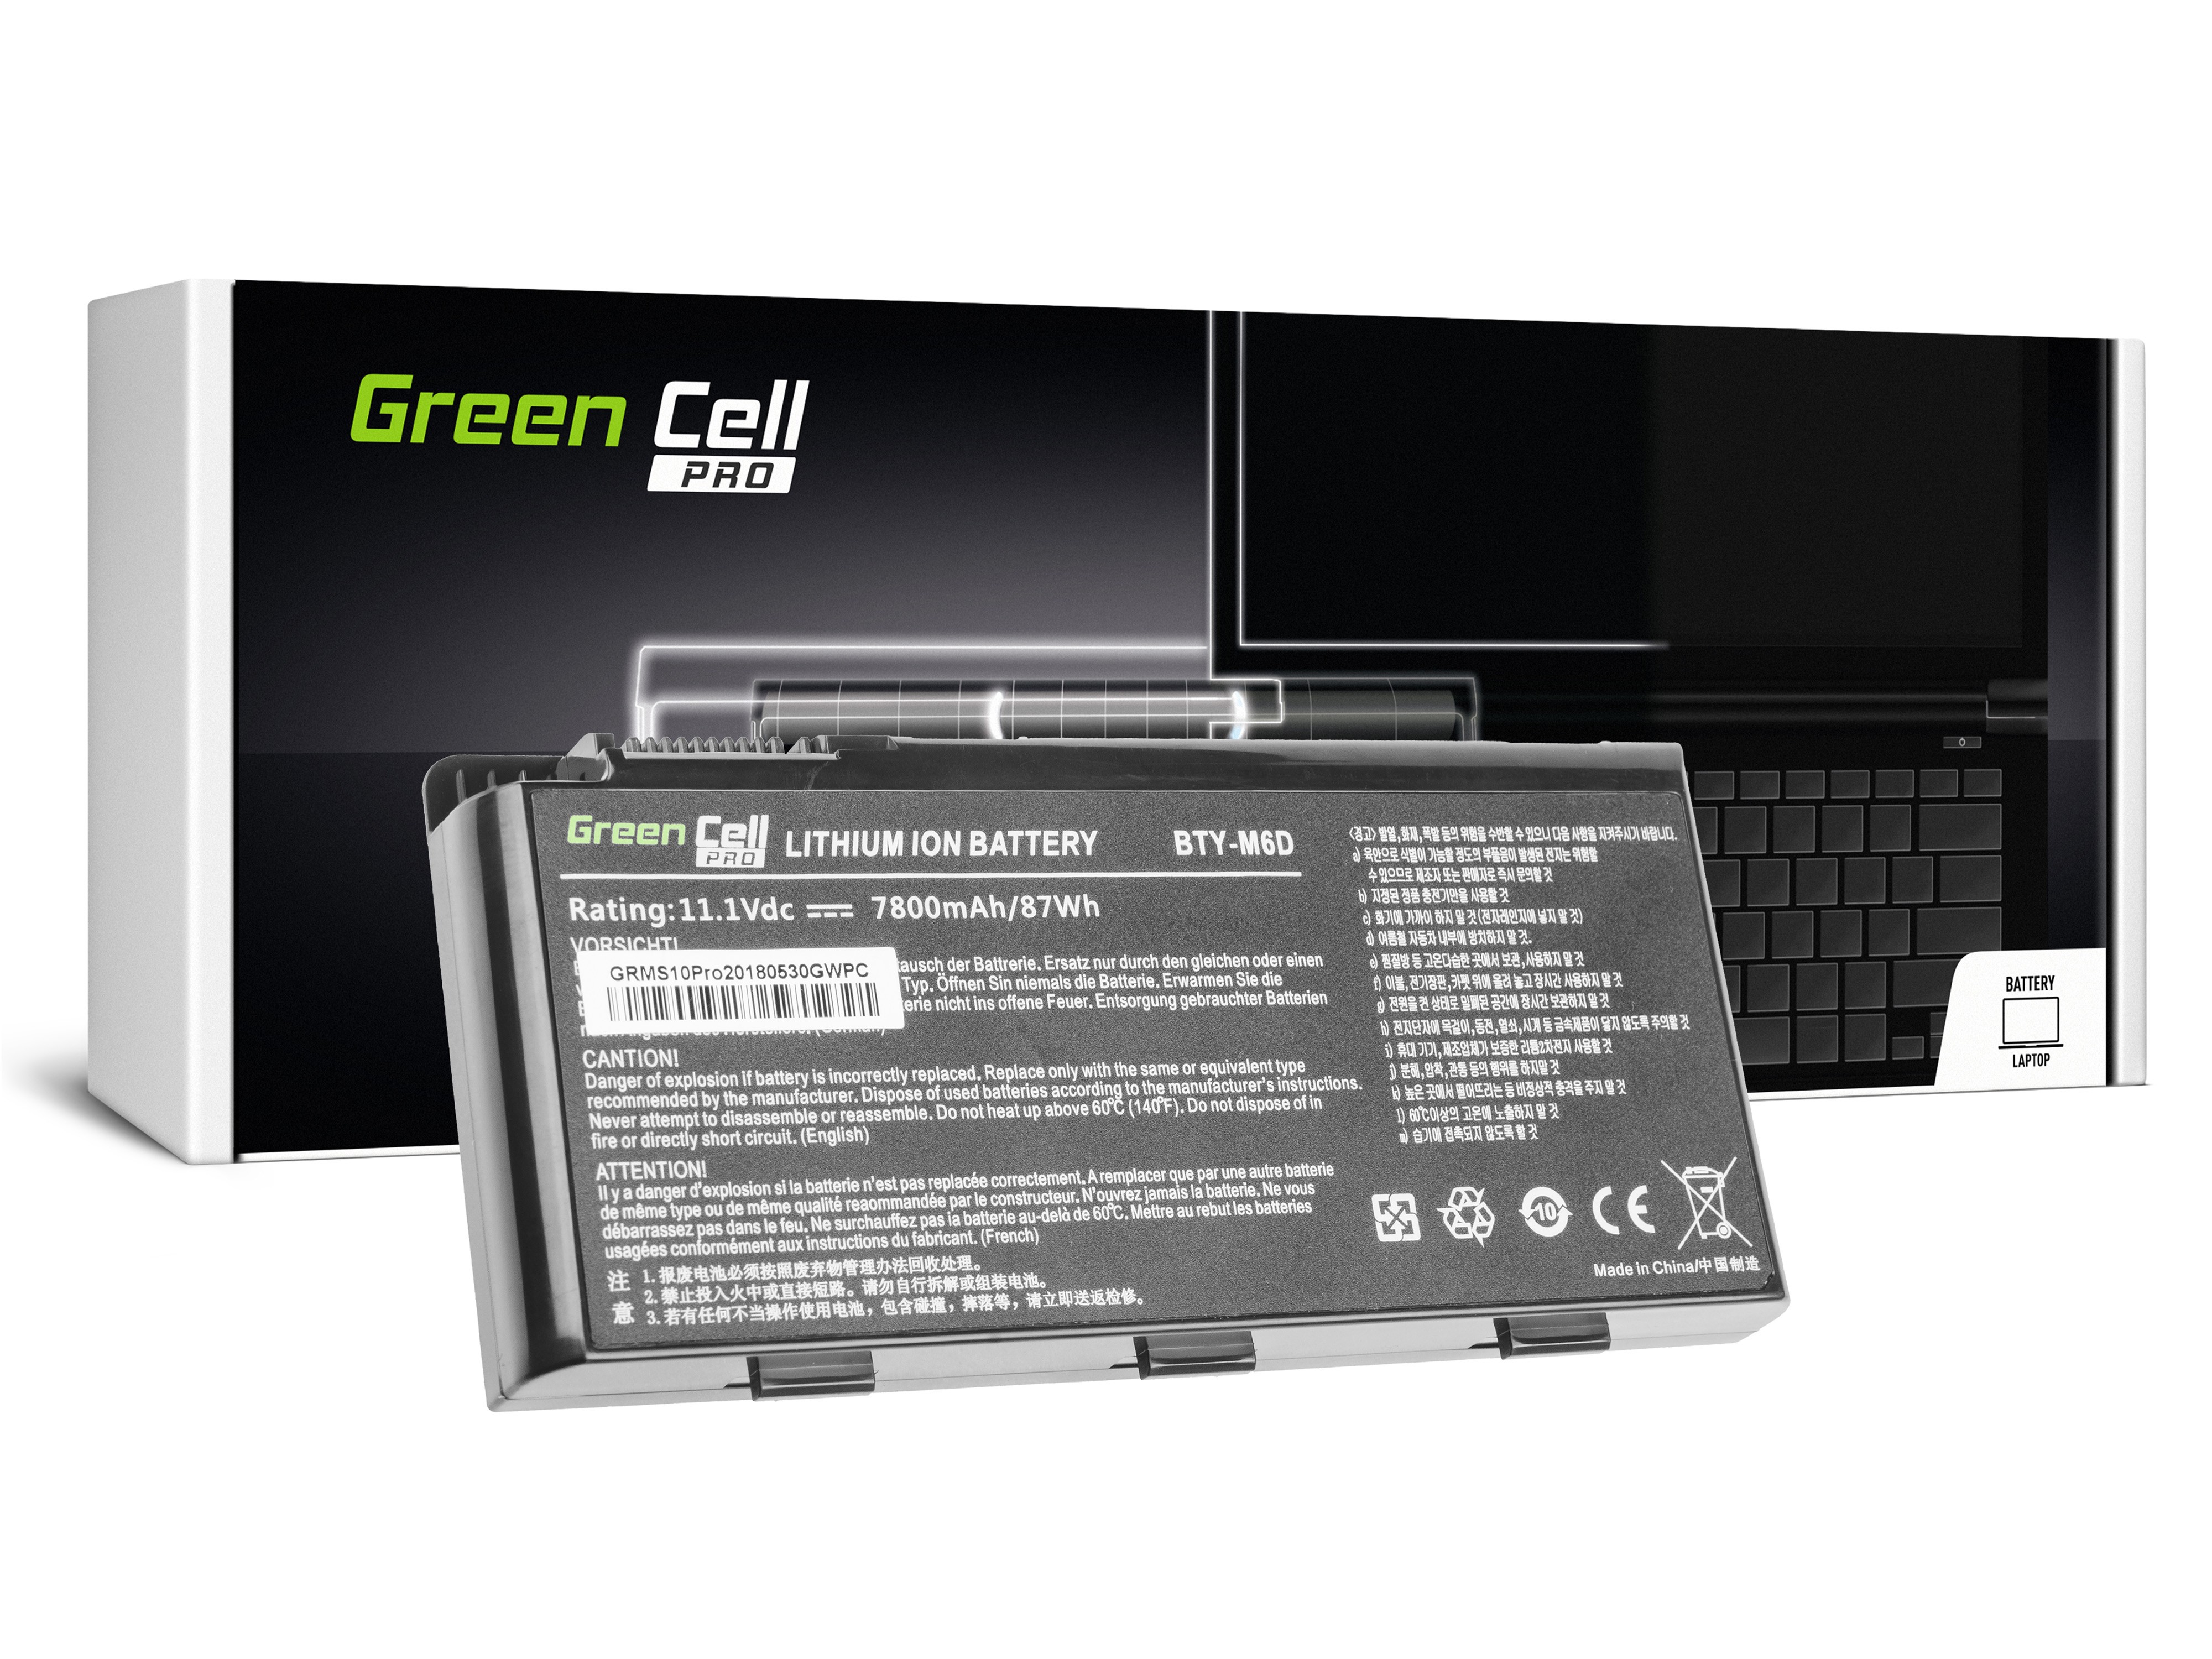 Green Cell PRO Battery for MSI GT60 GT70 GT660 GT680 GT683 GT780 GT783 GX660 GX680 GX780 / 11,1V 6600mAh